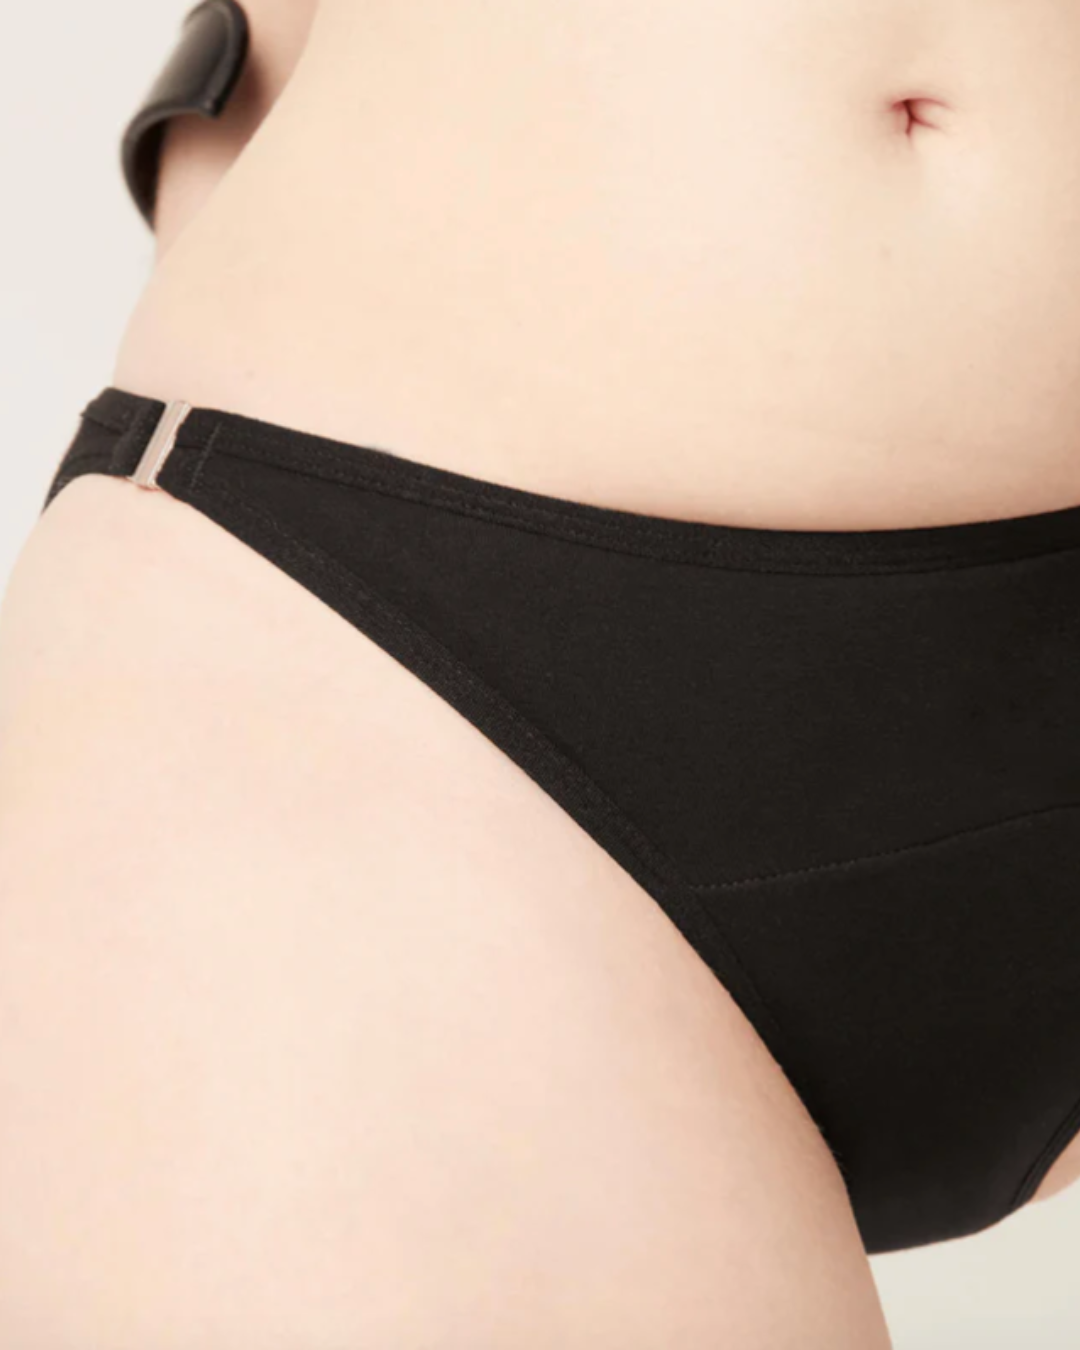 Adaptive period underwear close up